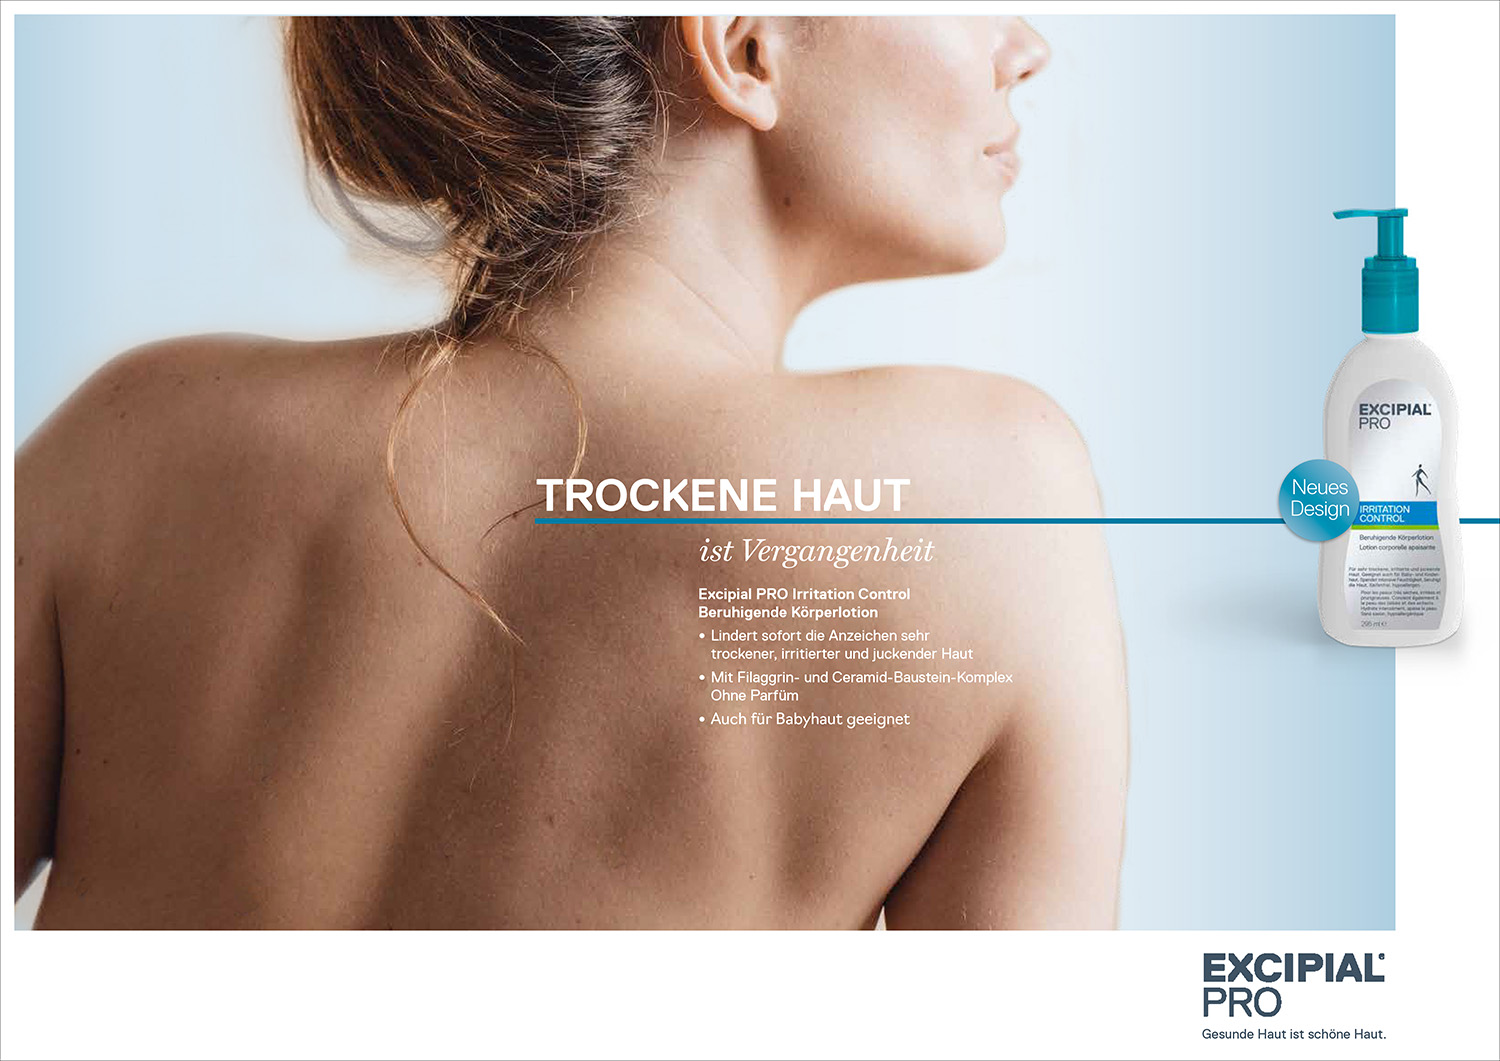 Galderma Excipial Pro Launchkampagne Inserat Trockene Haut